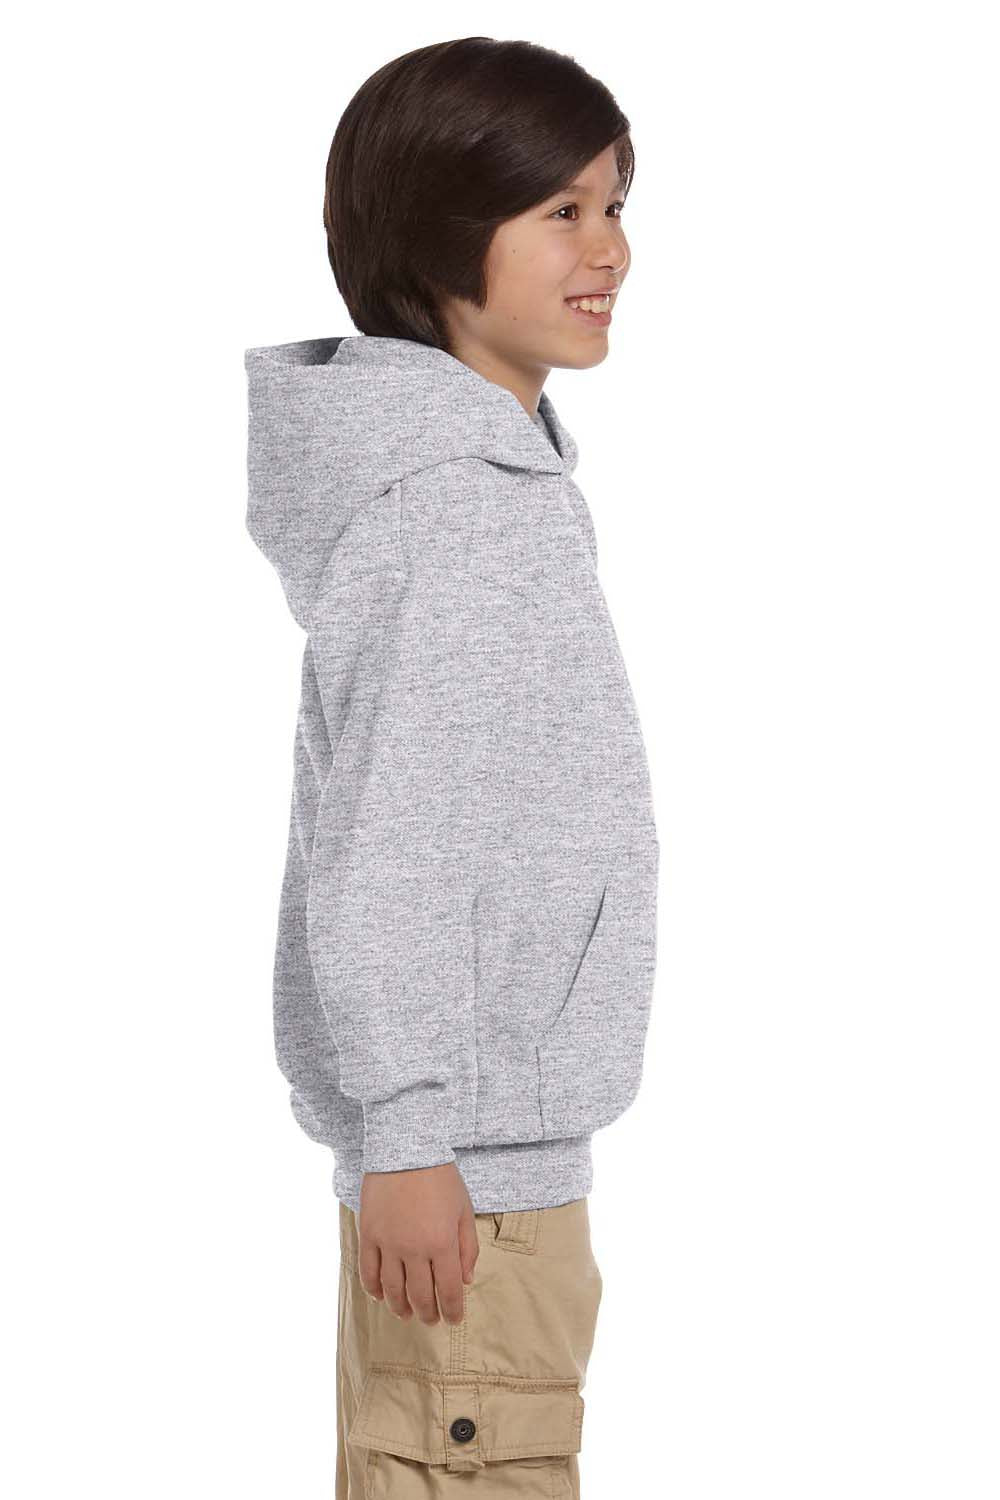 Hanes P473 Youth EcoSmart Print Pro XP Hooded Sweatshirt Hoodie Ash Grey Side